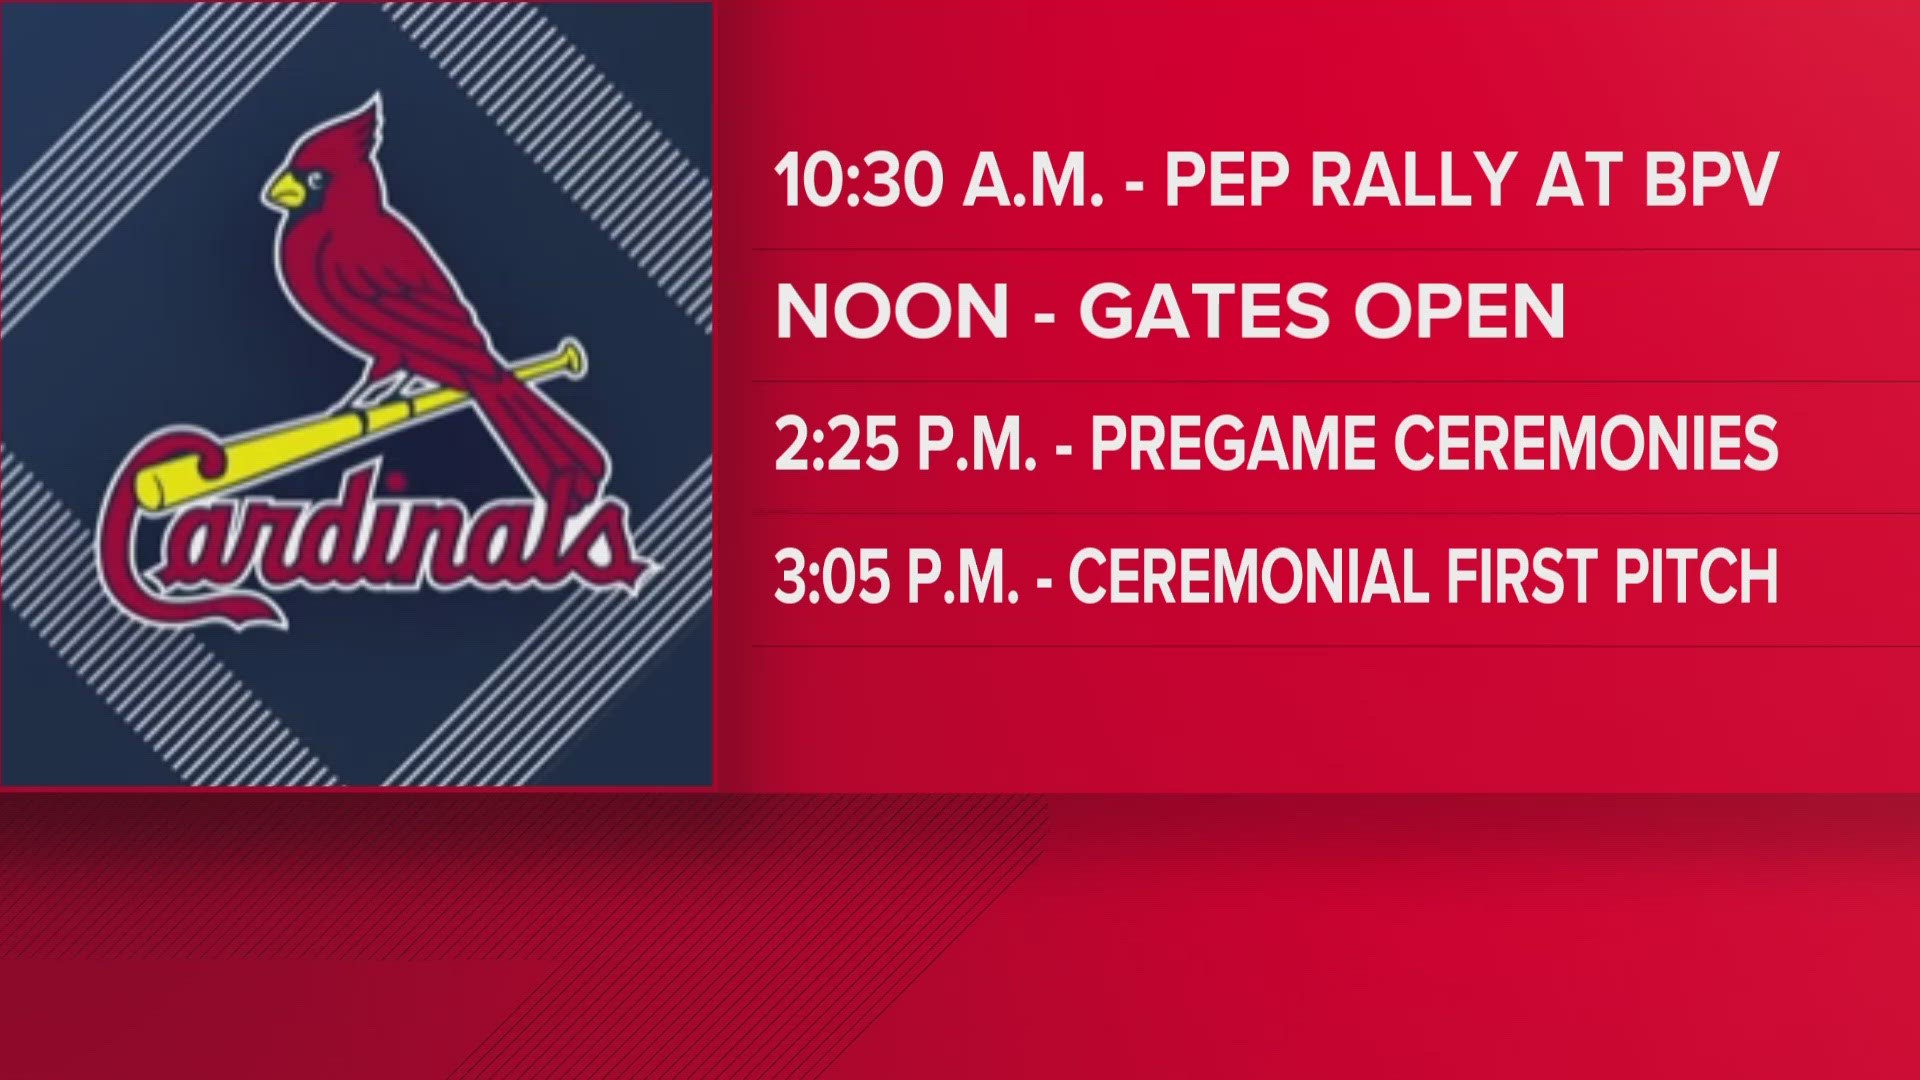 Ballpark Village - St. Louis Cardinals Opening Day activities